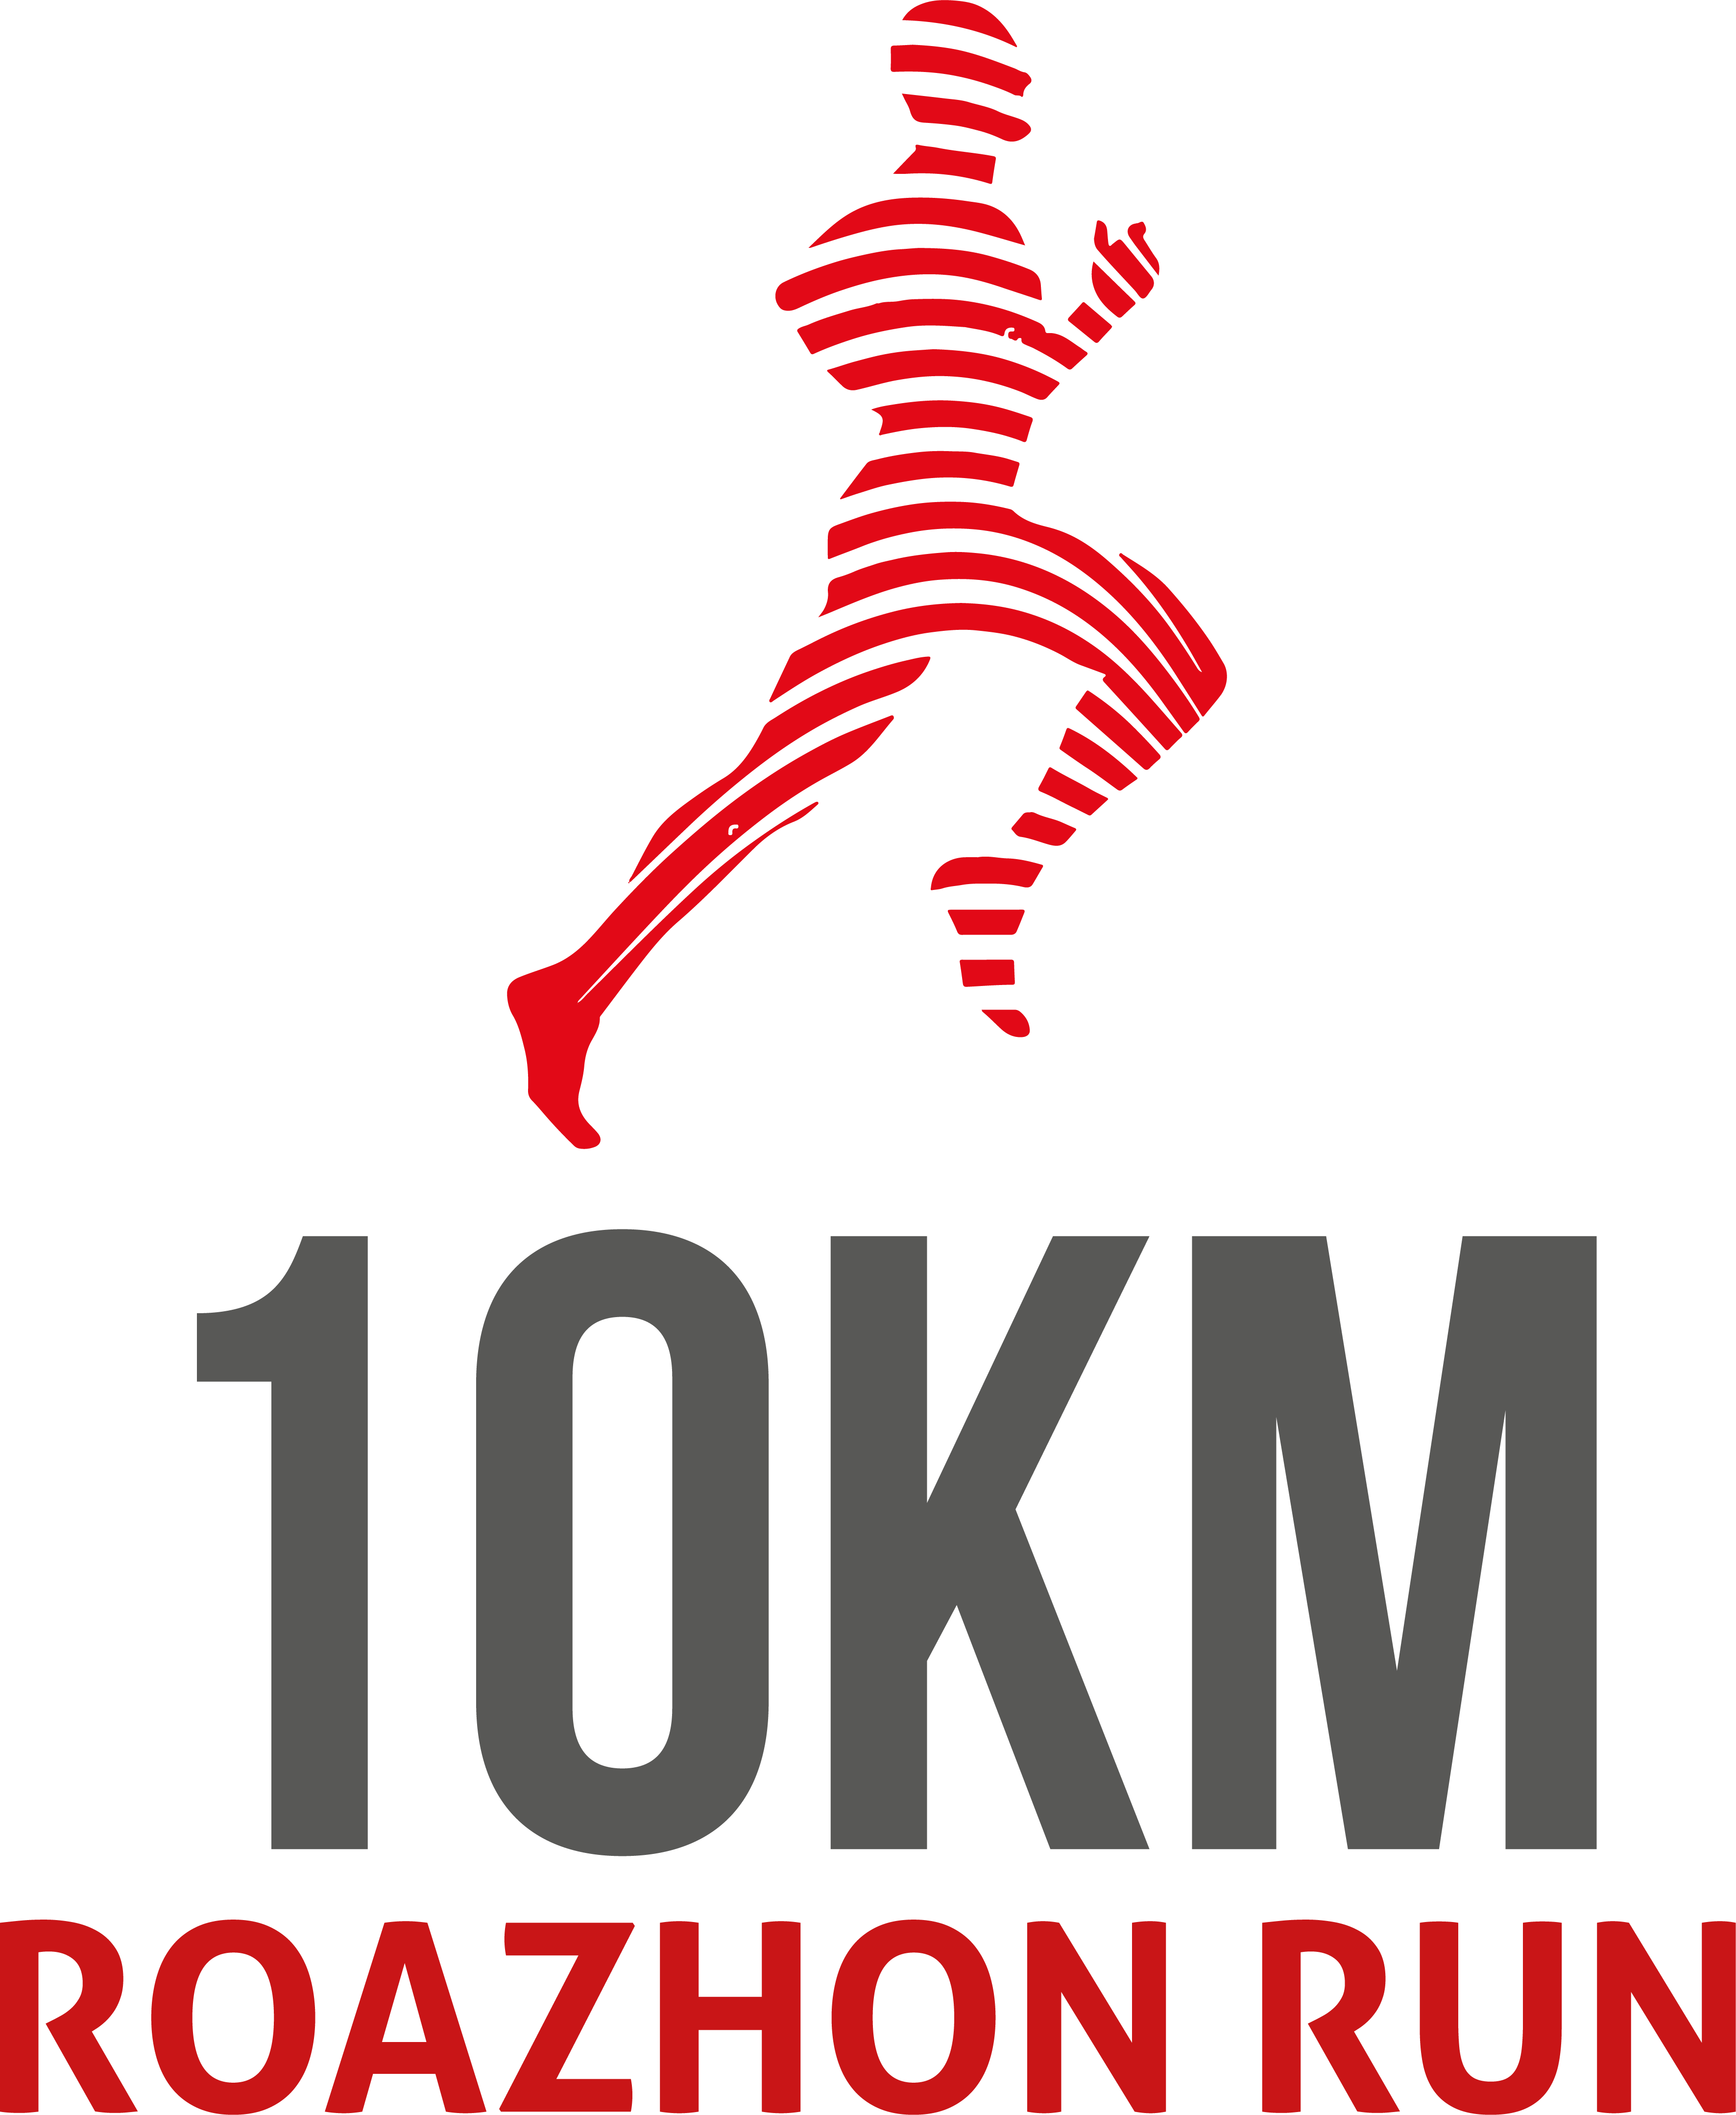 Roazhon Run 10km